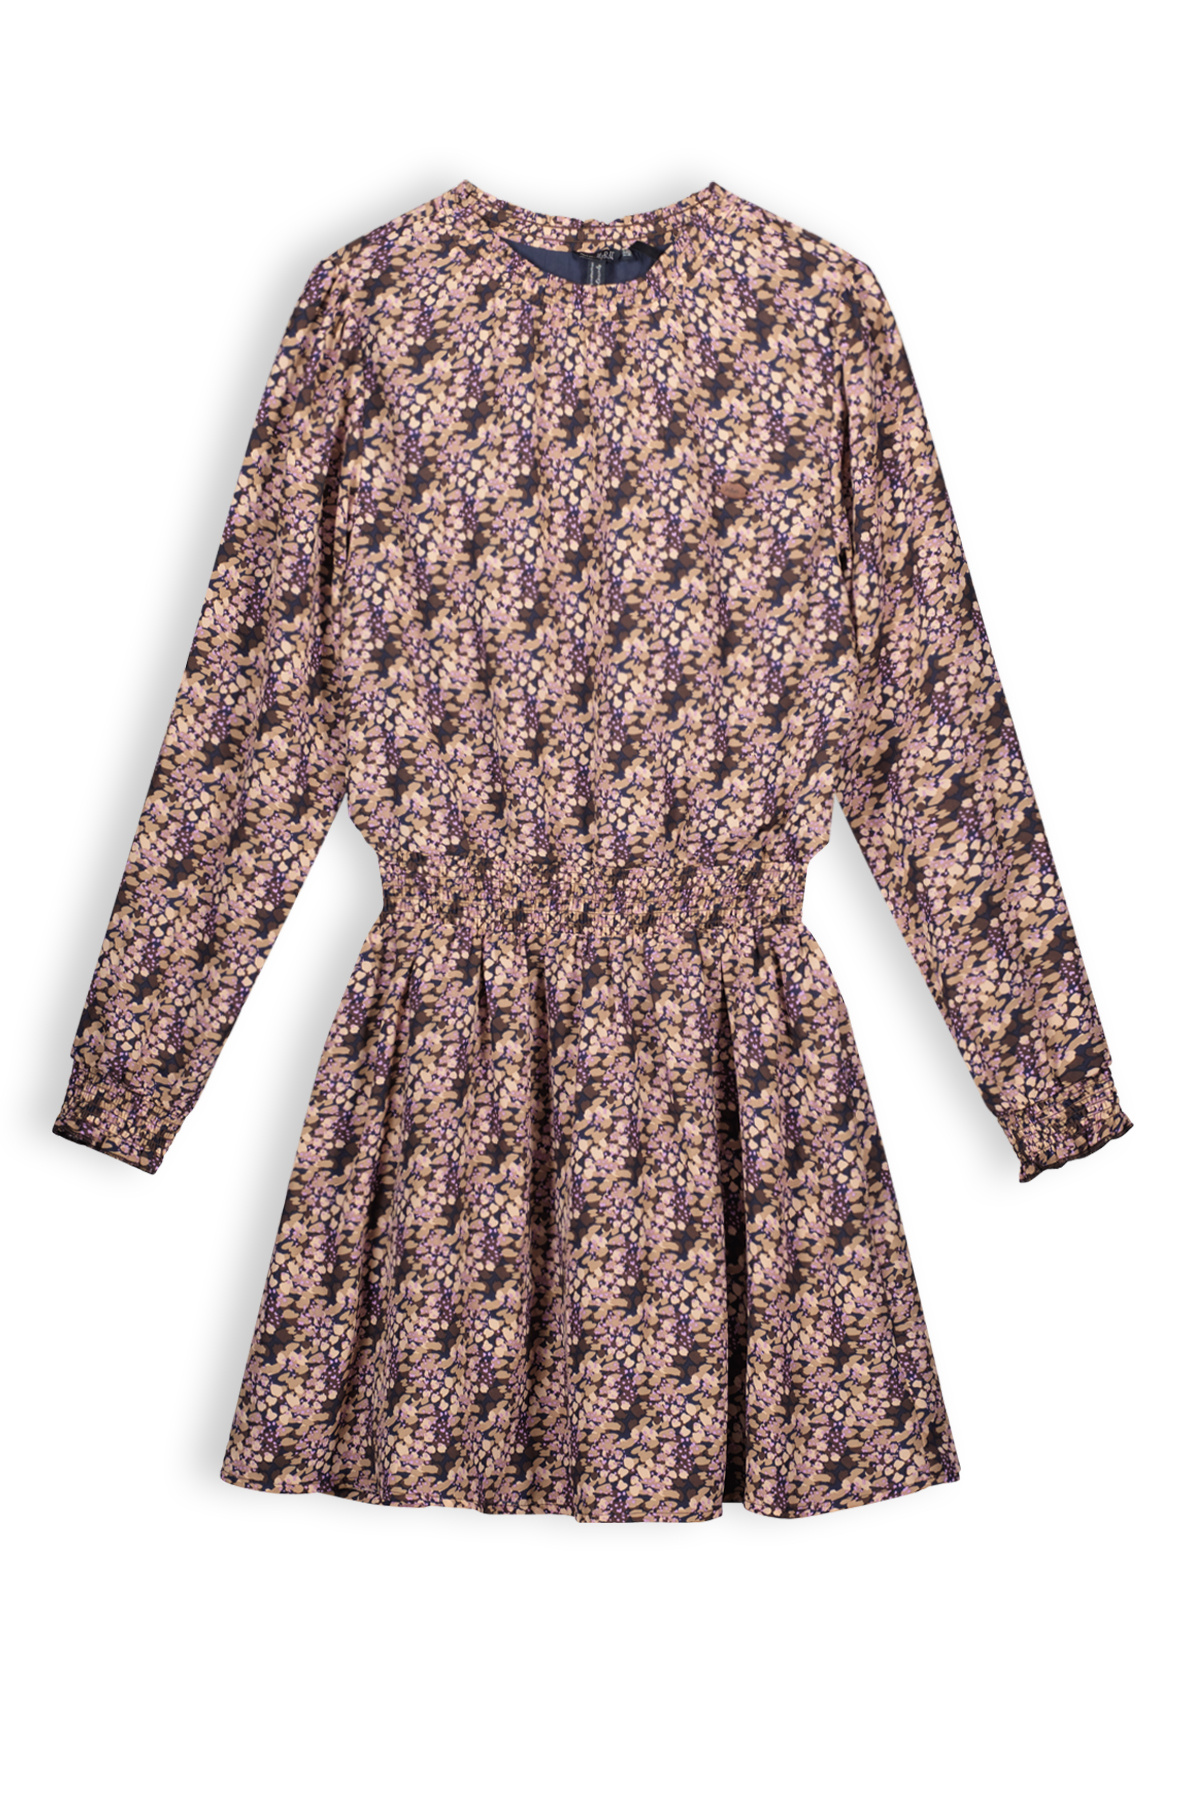 NoBell Meisjes jurk print - Moory - Donker roast bruin